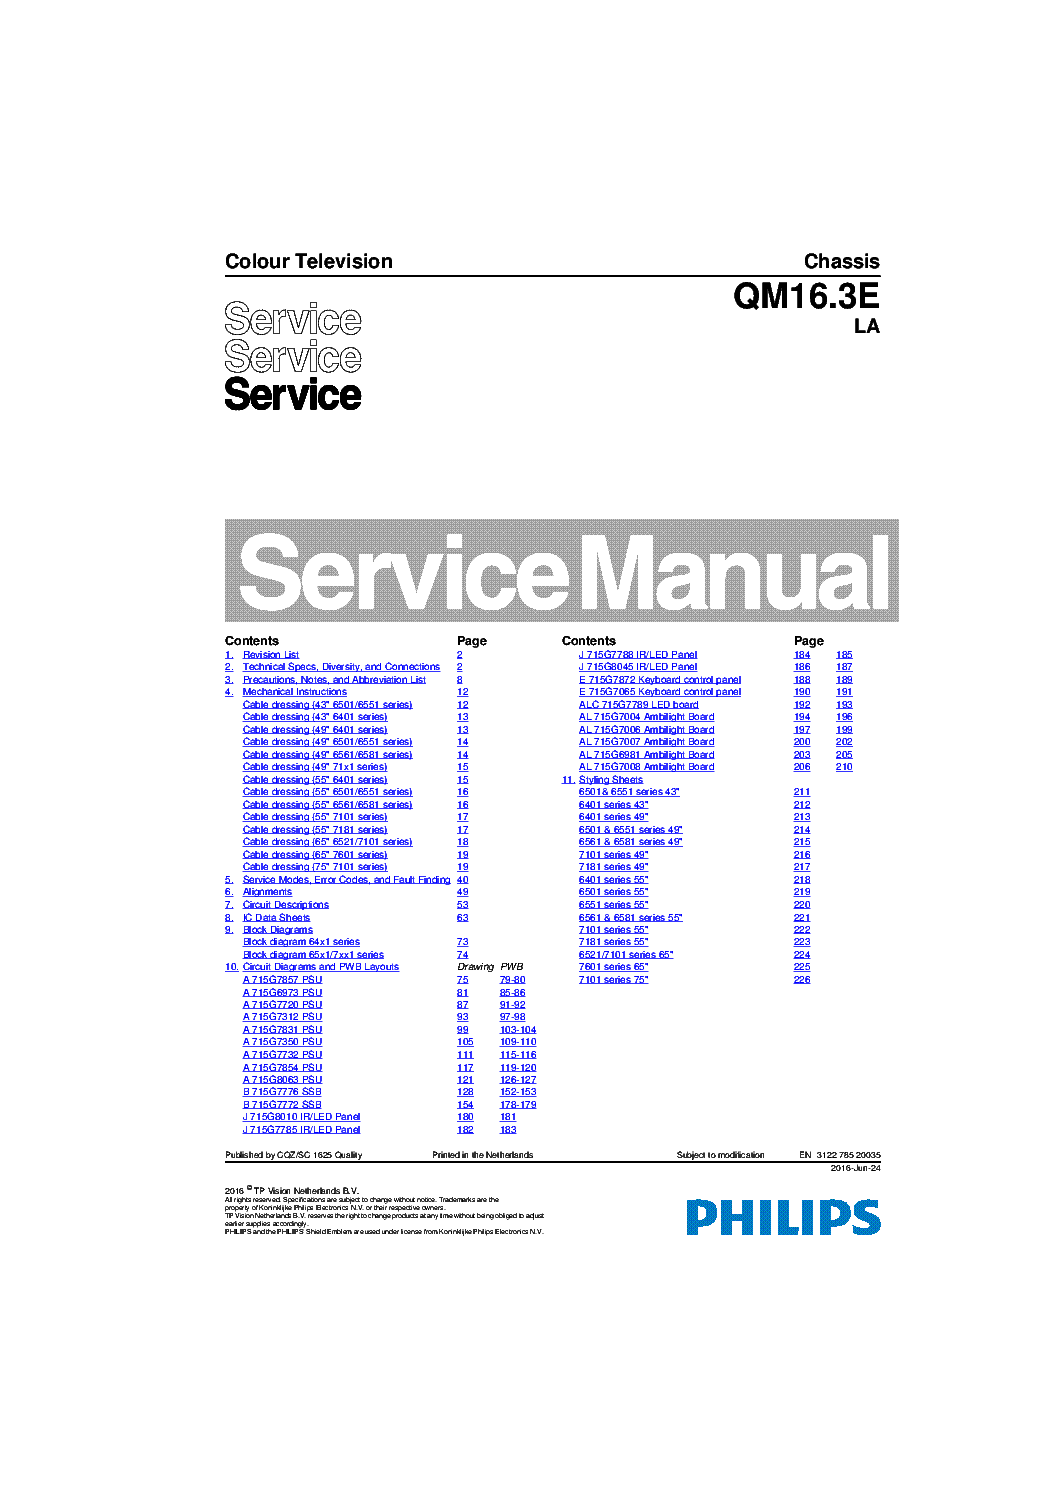 PHILIPS 55PUS6401 CHASSIS QM16.3E LA SM service manual (1st page)